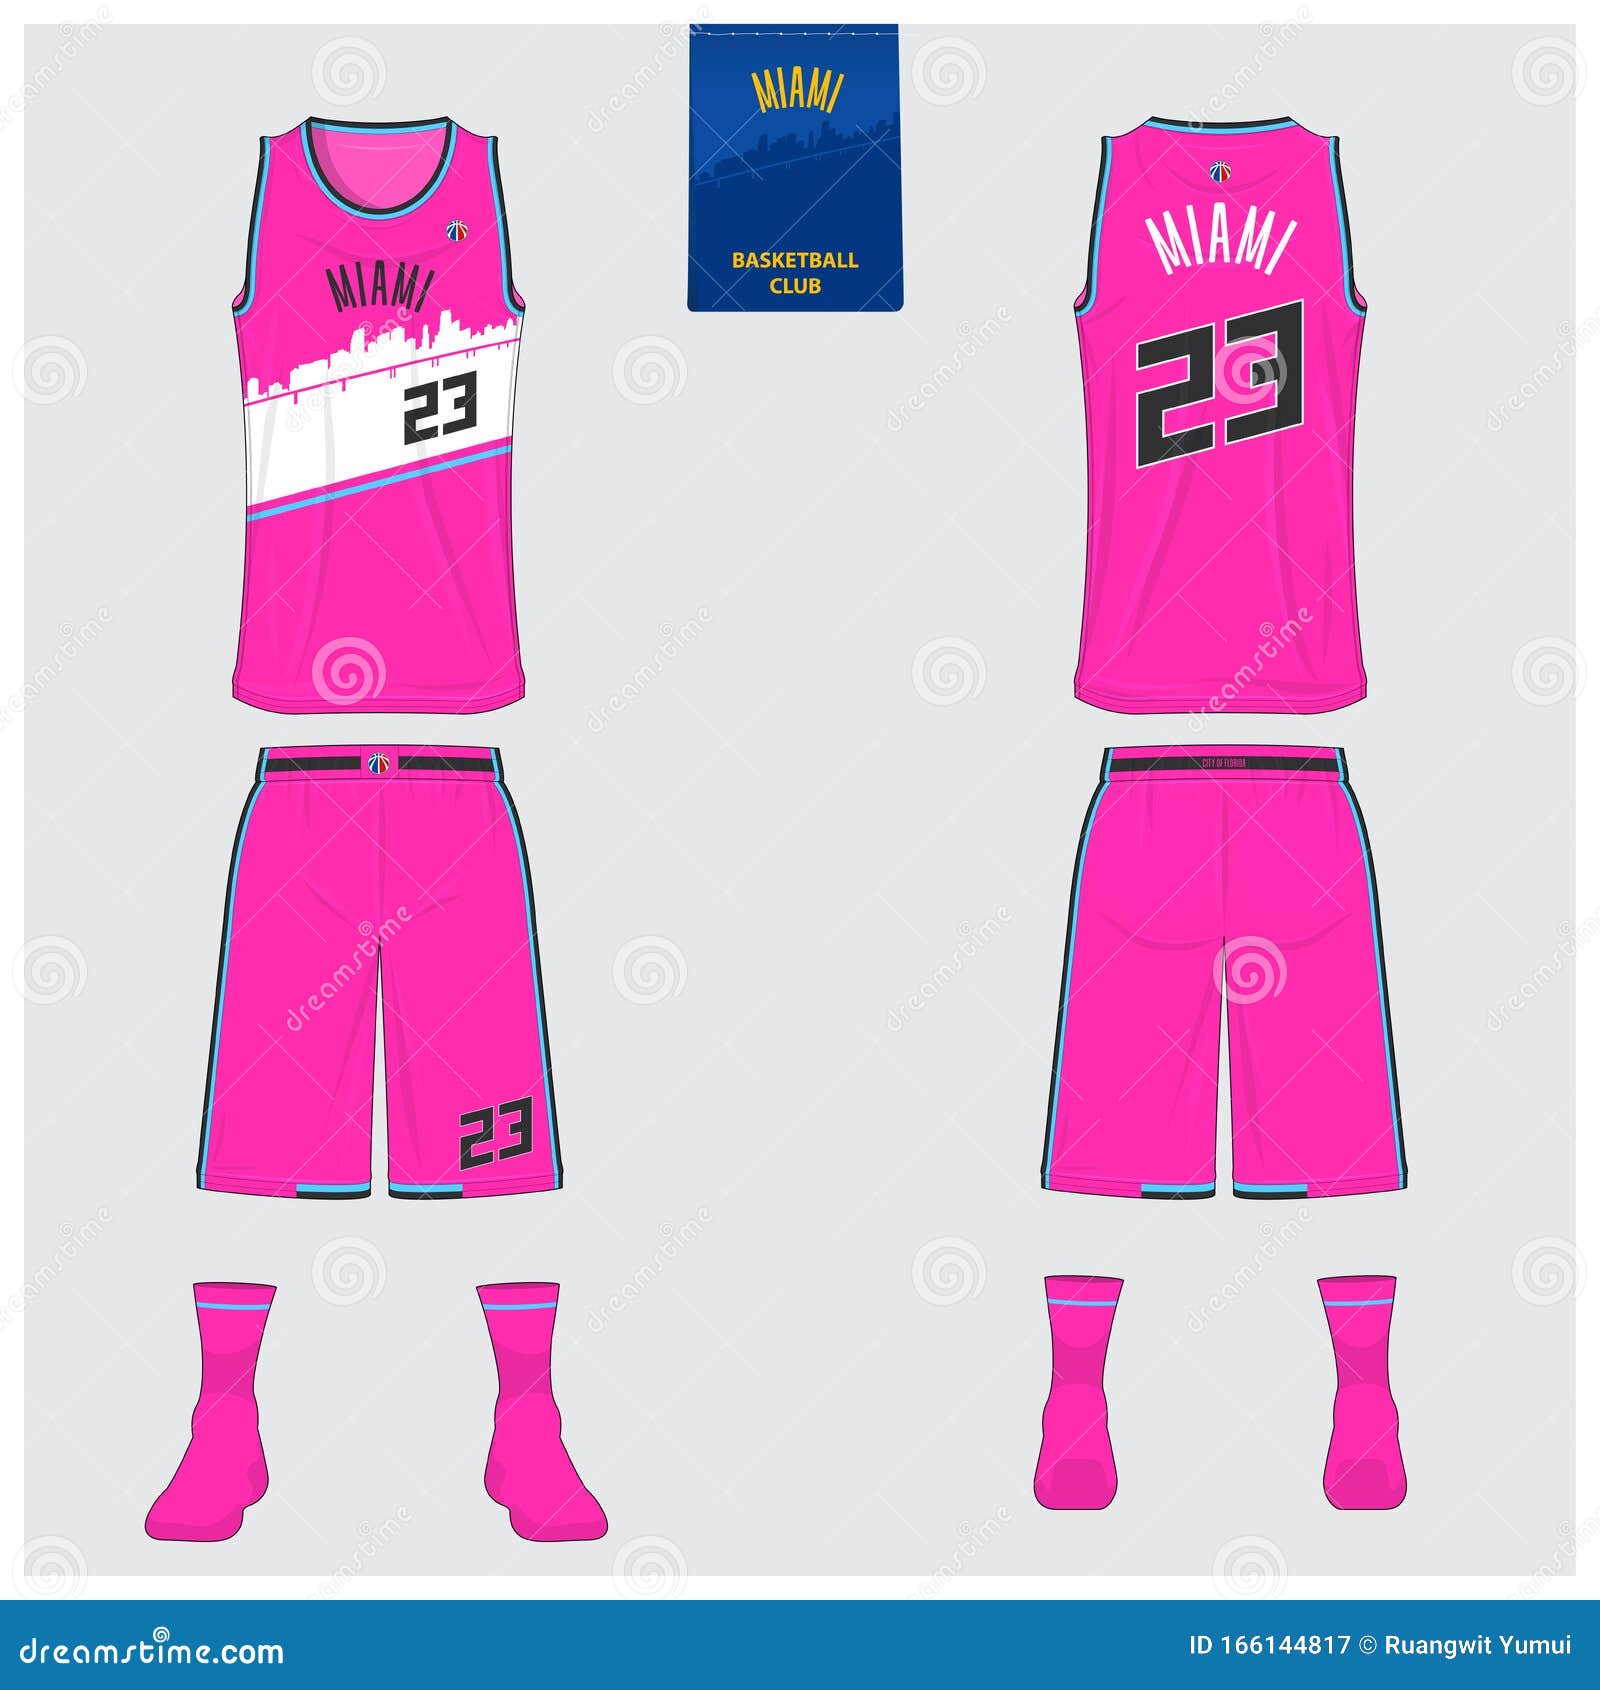 Basketball uniform jerseys front and back mock ups